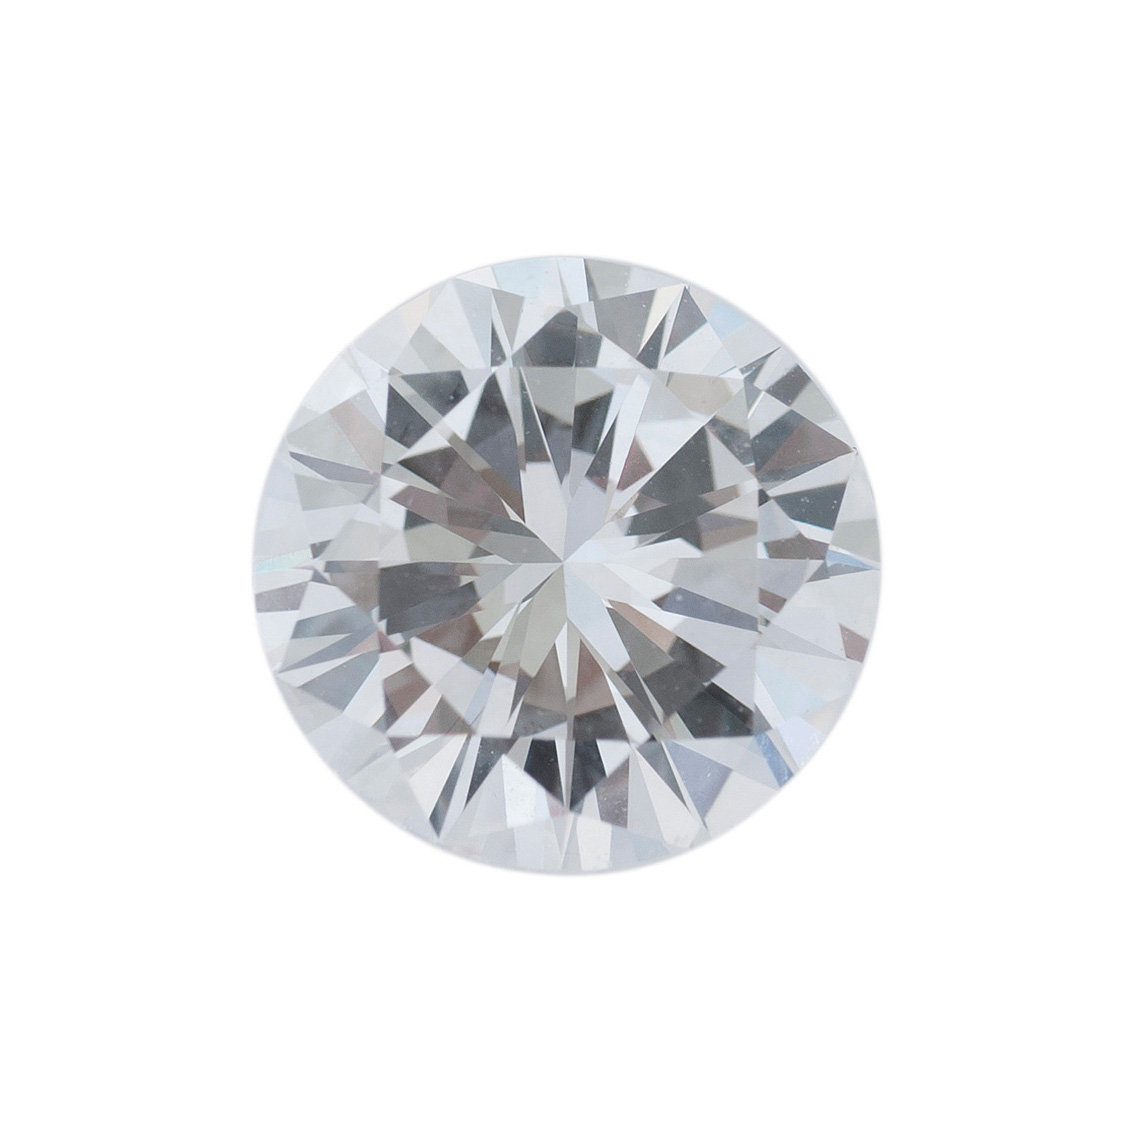 A highquality diamond